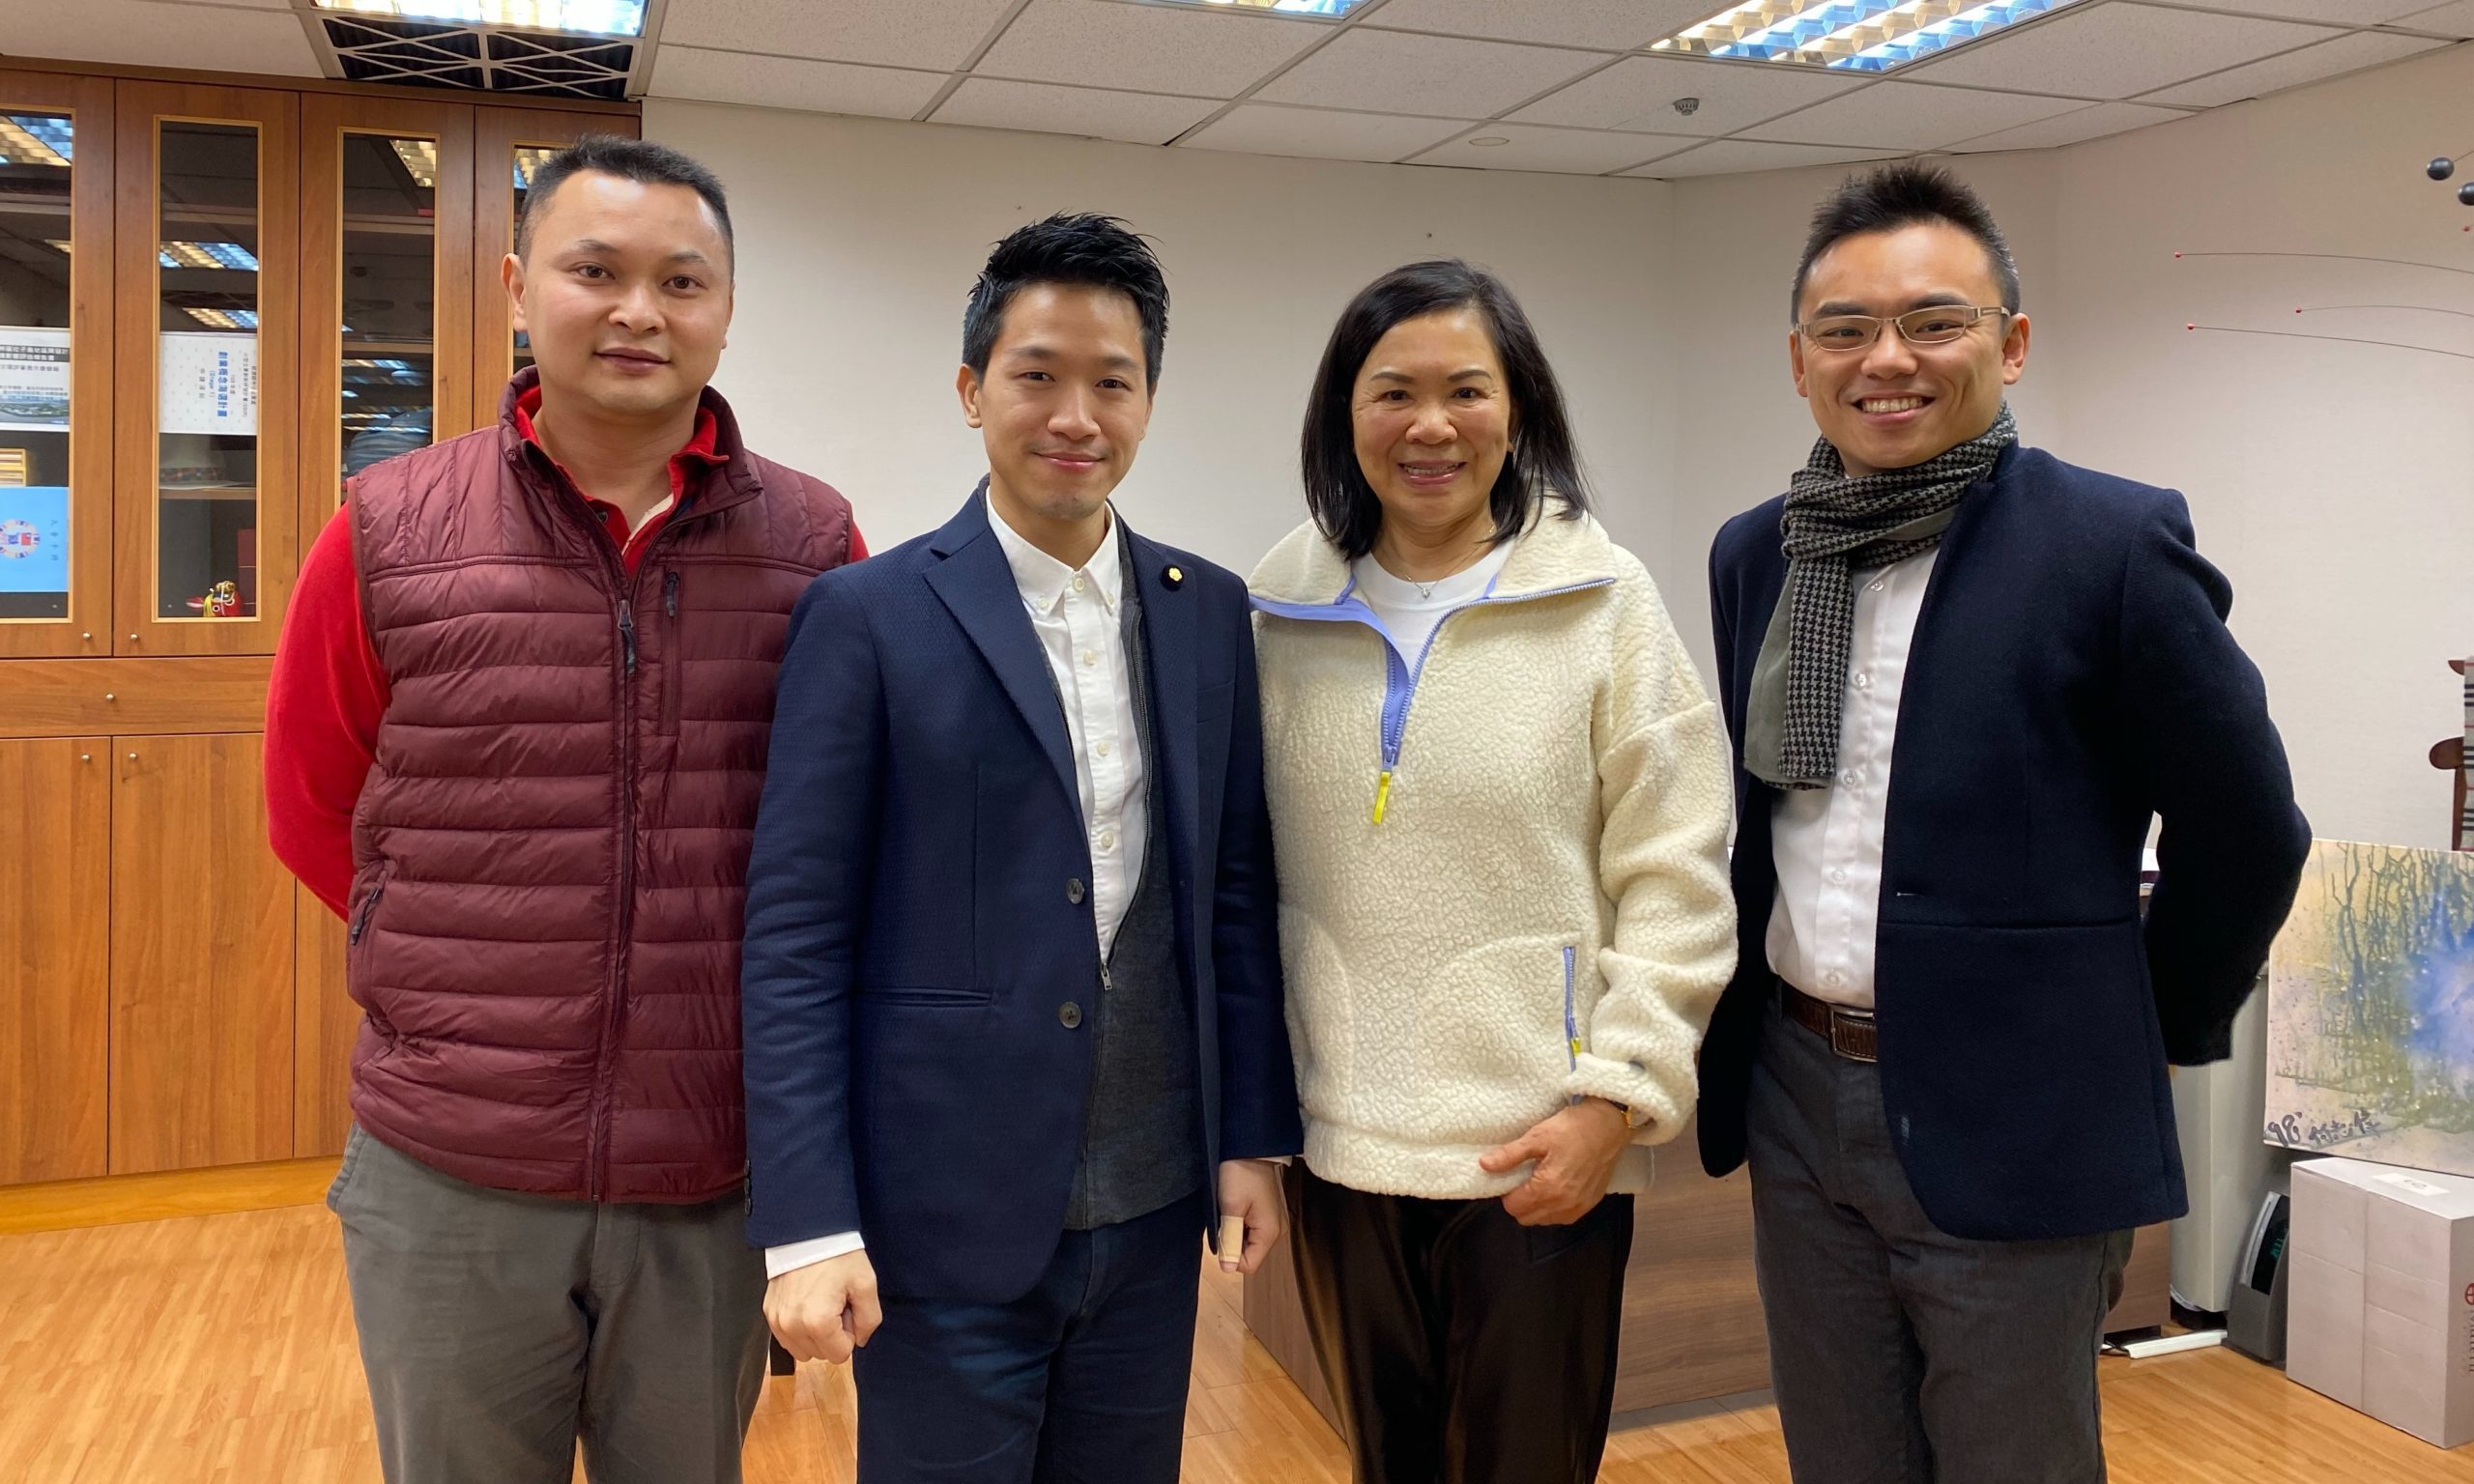 IPPAM Reunion in Taiwan (February 18, 2020)